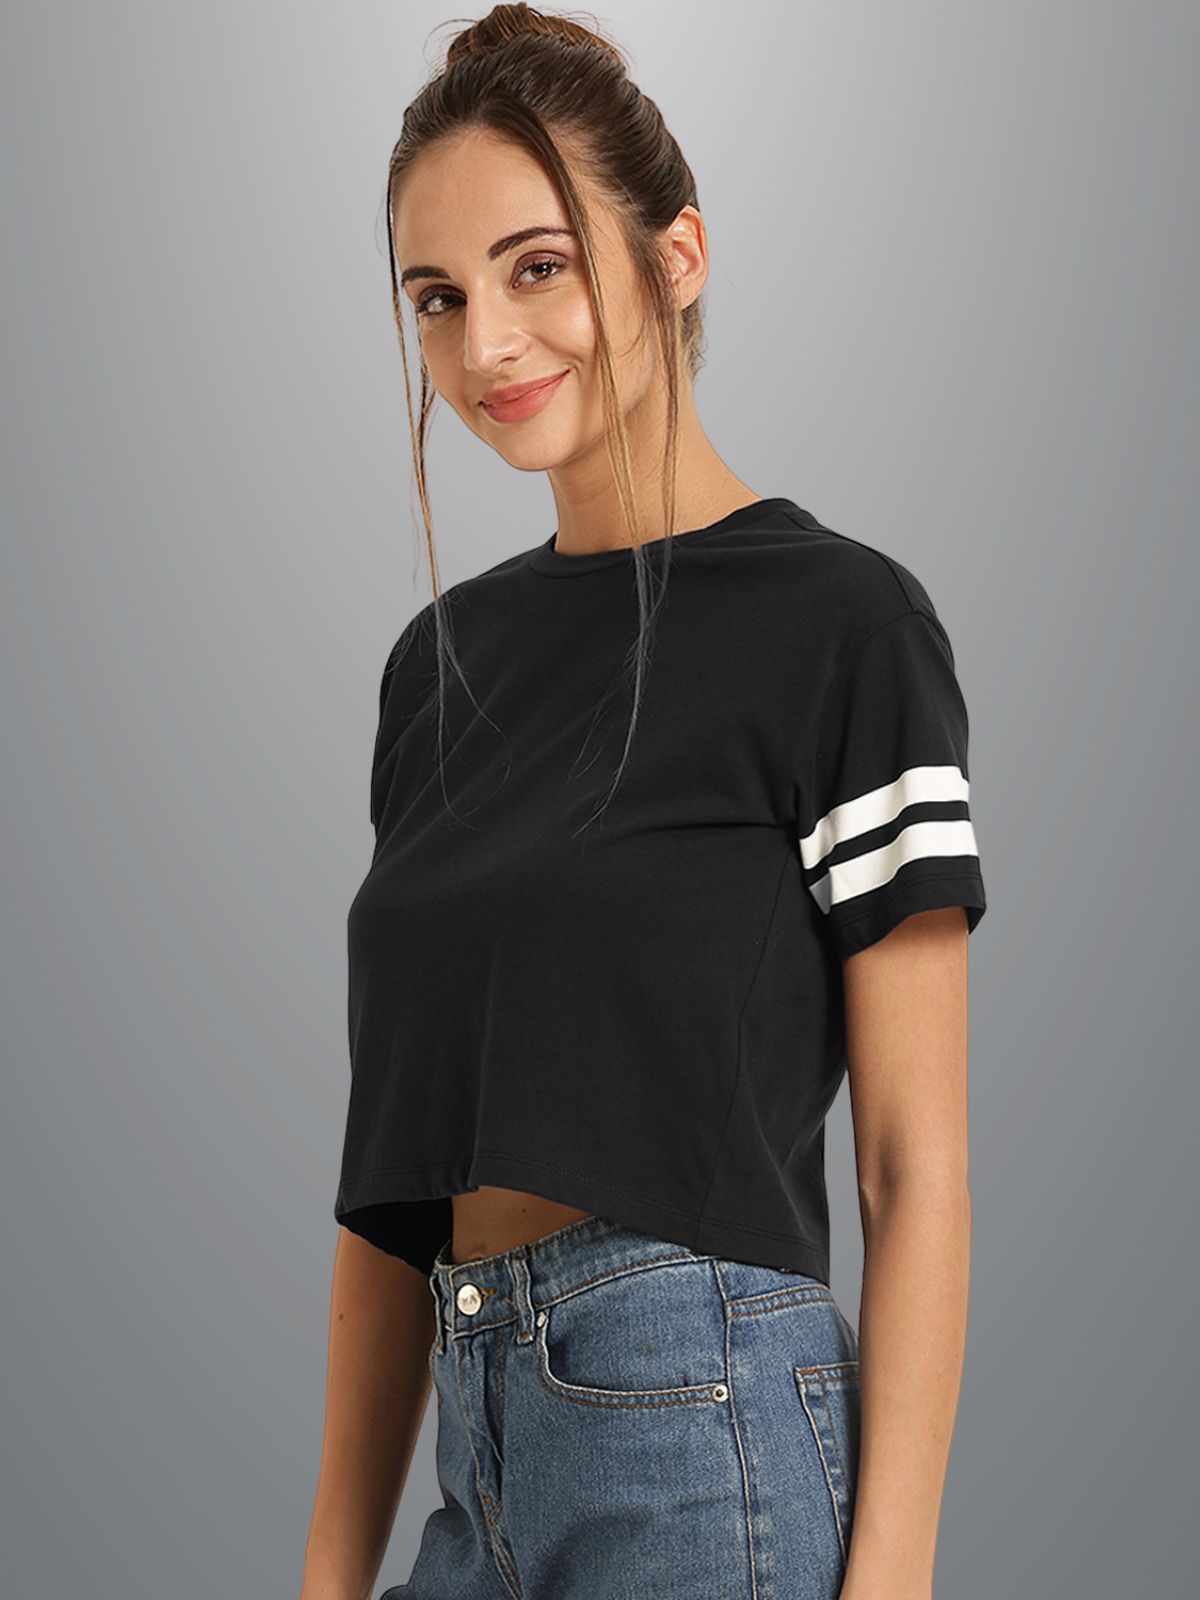 Womens Solid Black Cotton Crop Top With Designer White Stripe